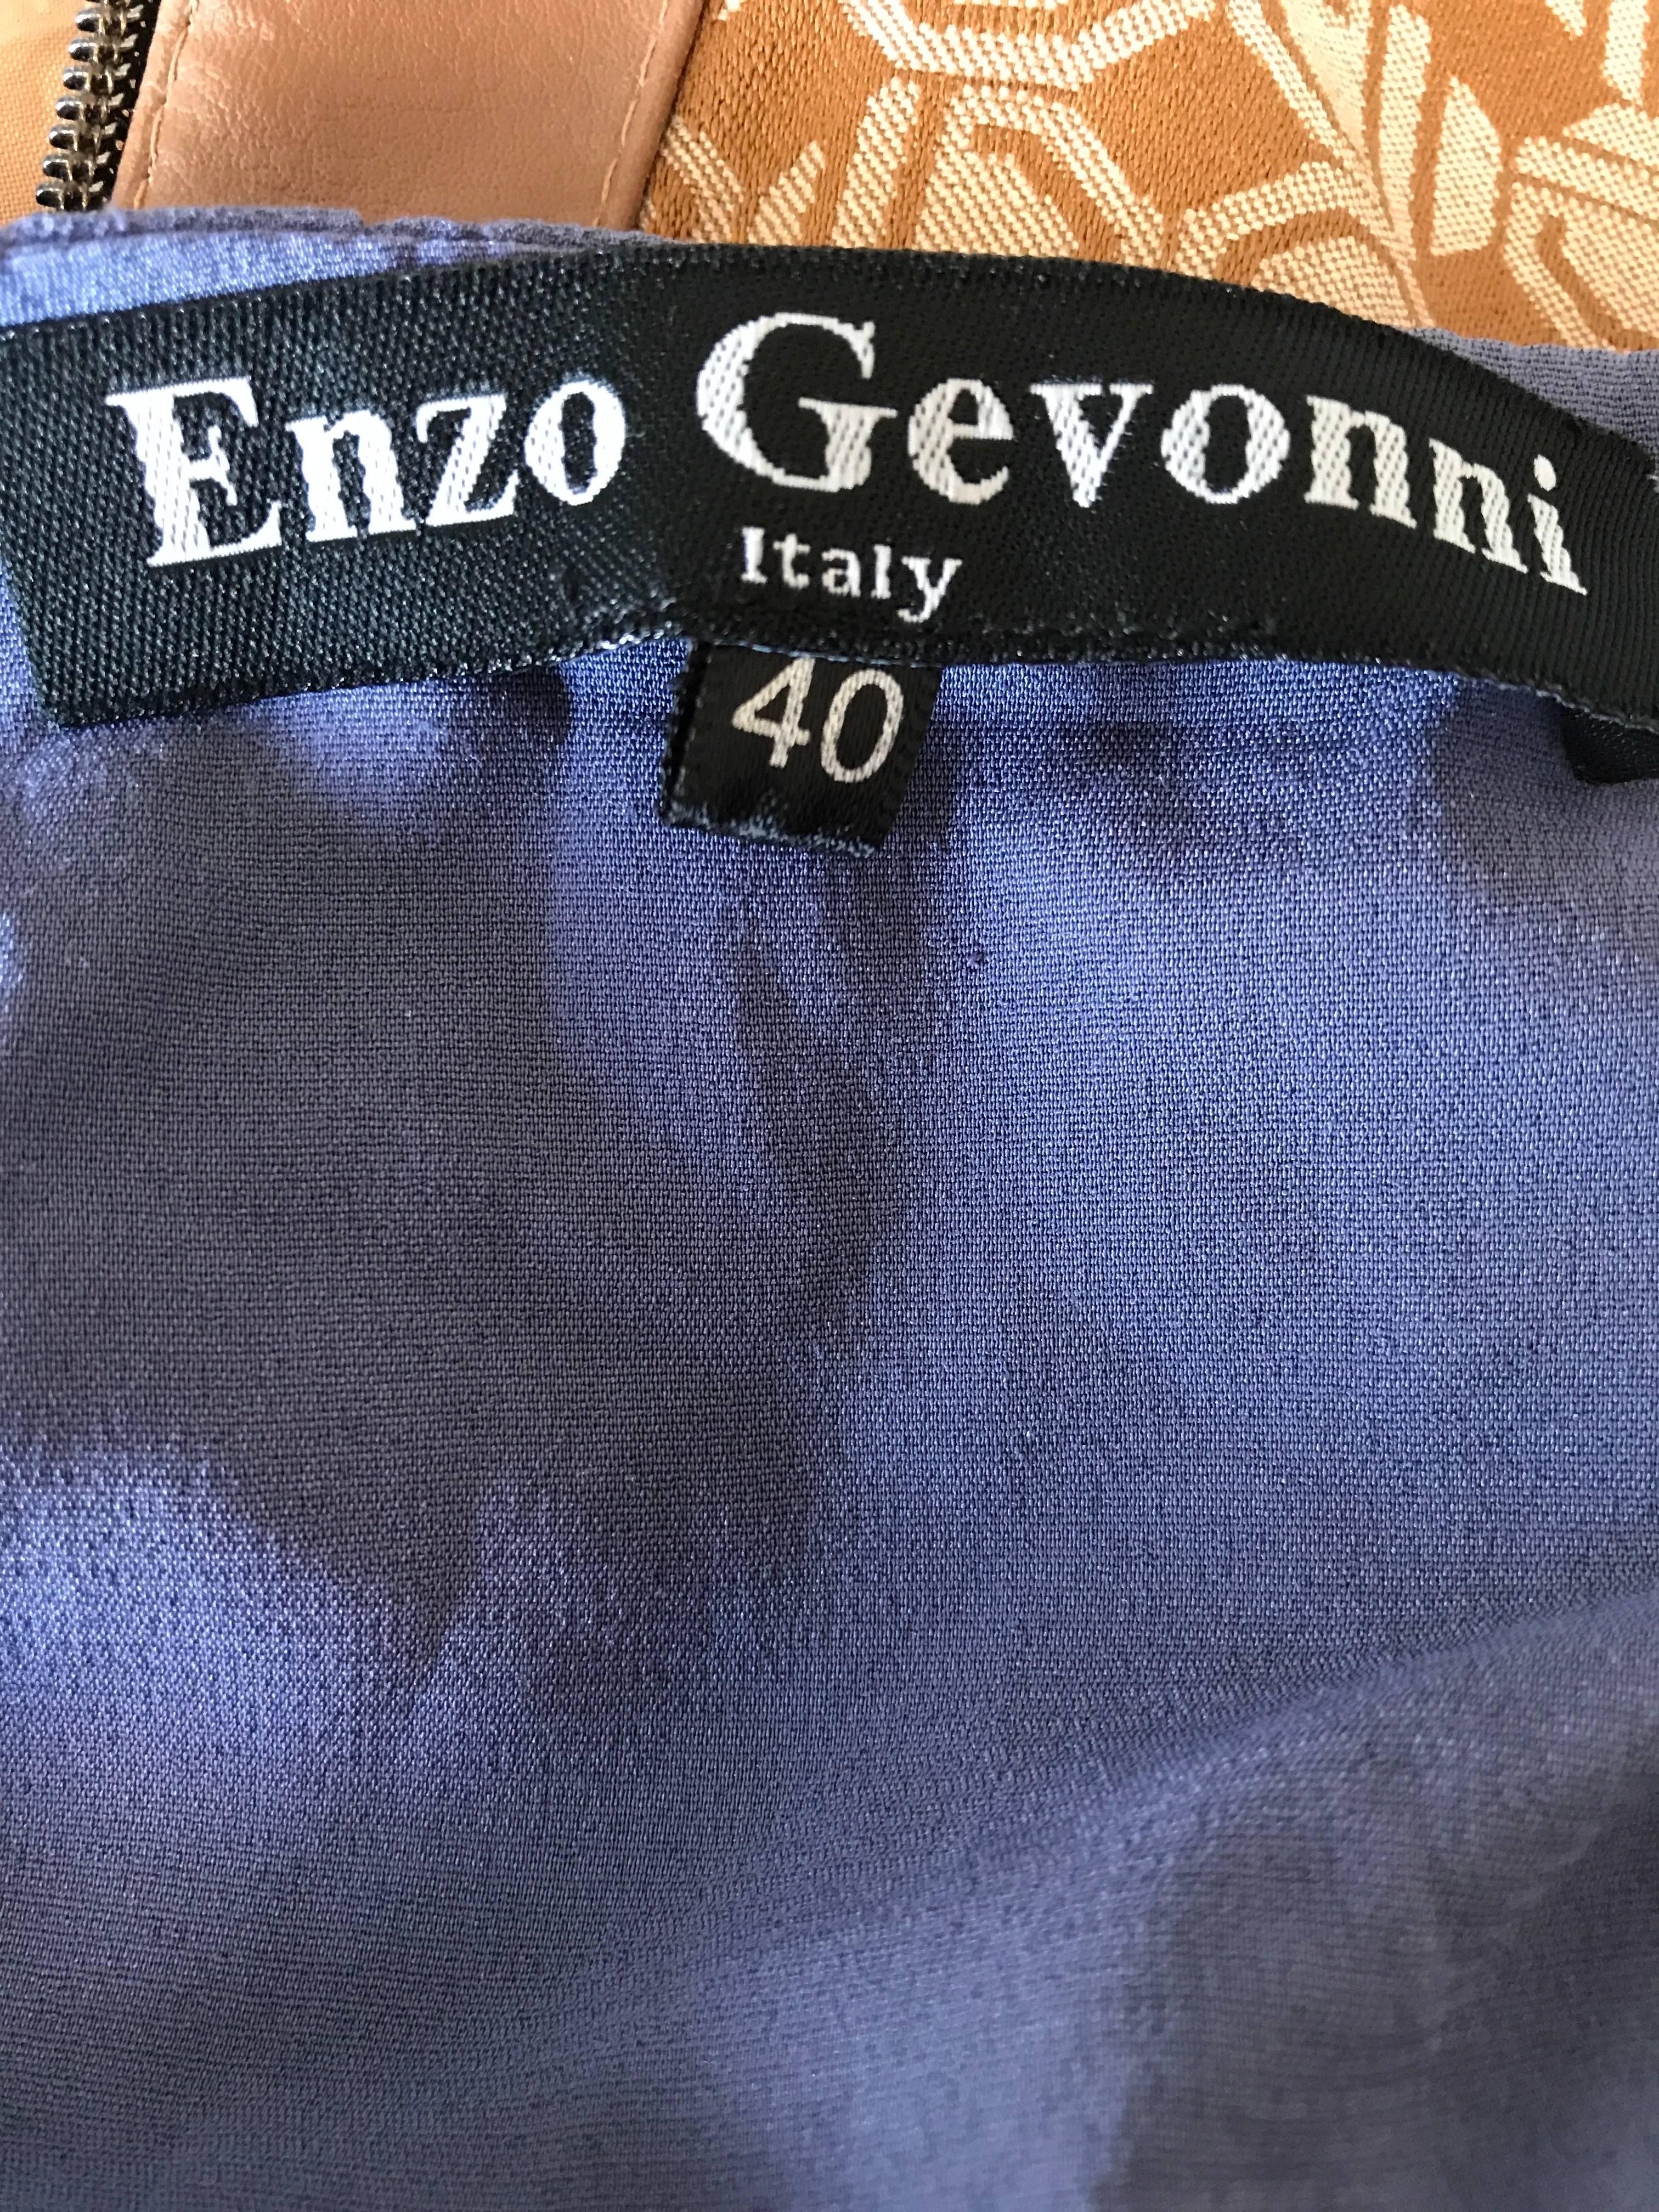 Enzo Gevonni Vintage Perwinkle Purple Crochet Babydoll Vintage Mini Dress Tunic For Sale 2